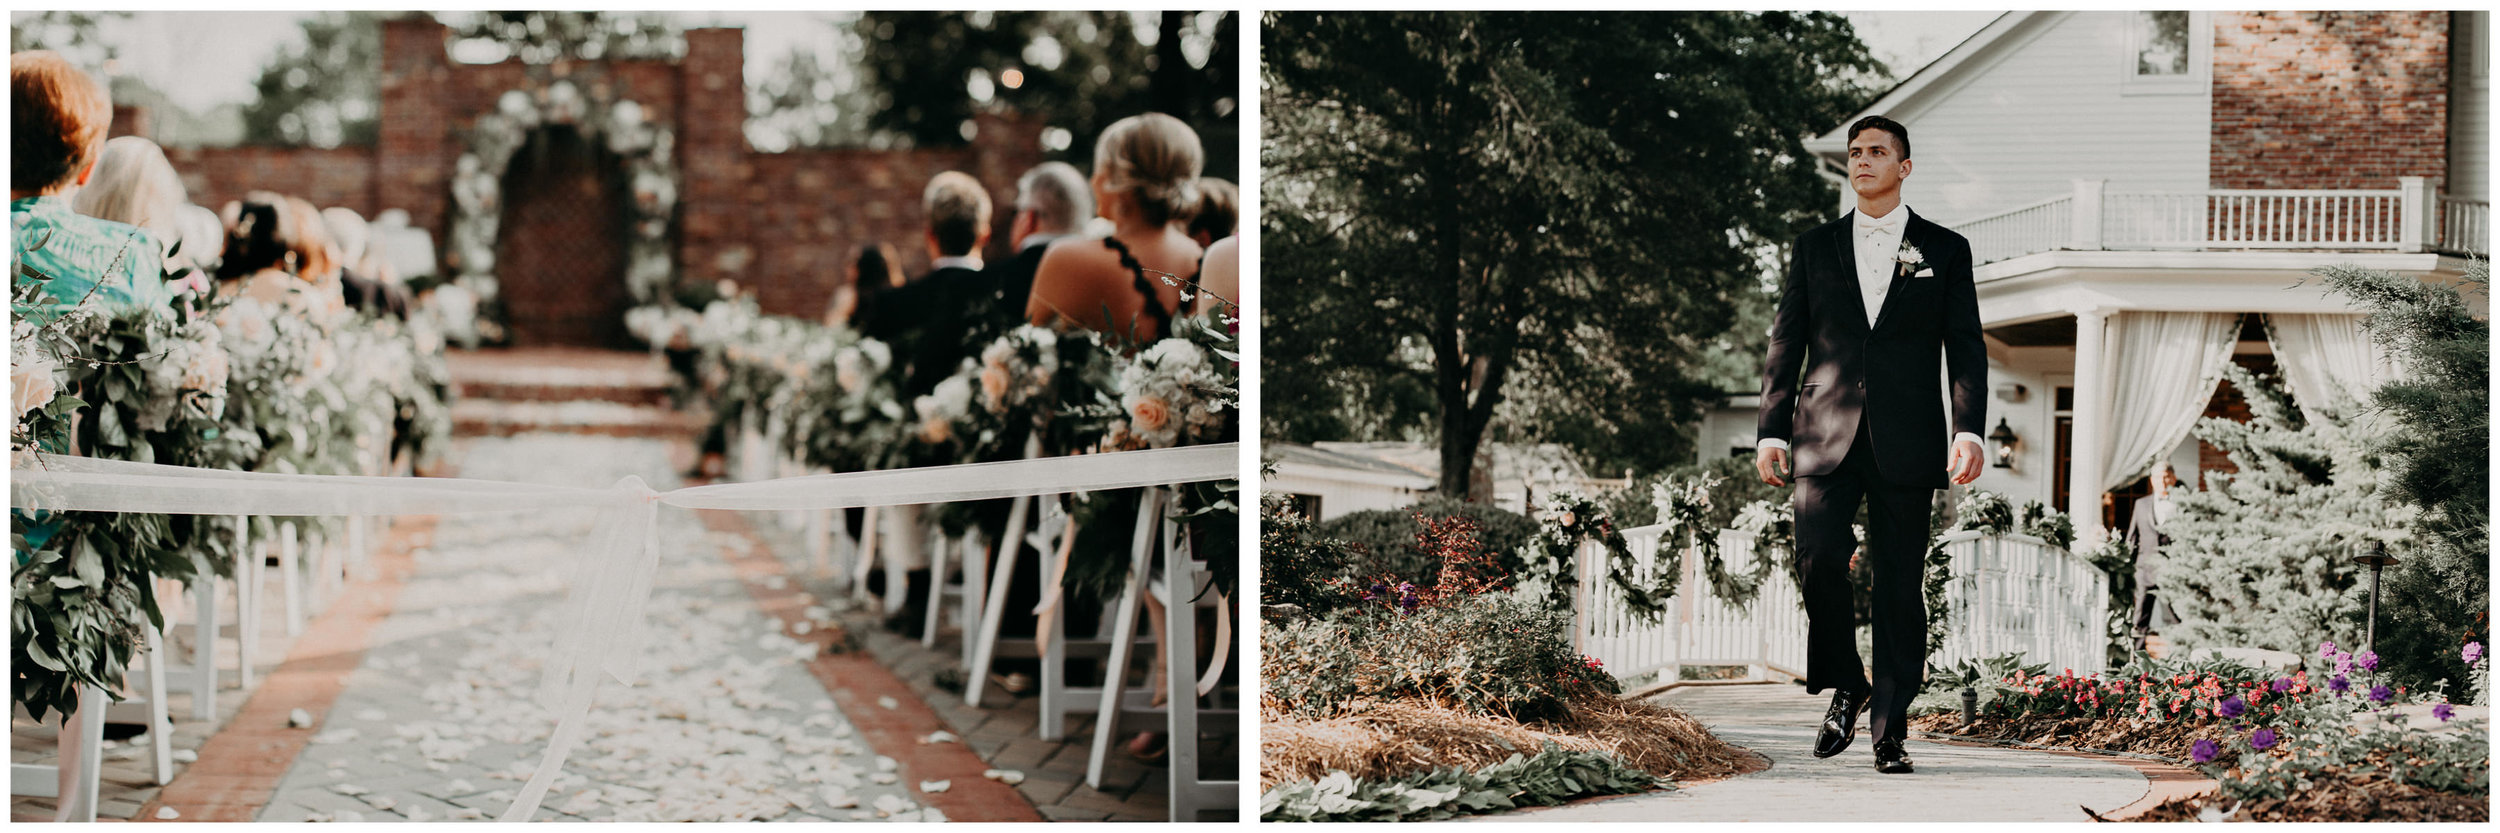 65Carl House Wedding Venue Ga, Atlanta Wedding Photographer - Boho, Bohemian, Junebug Weddings, Vintage, Retro, Trendy. Aline Marin Photography. .jpg